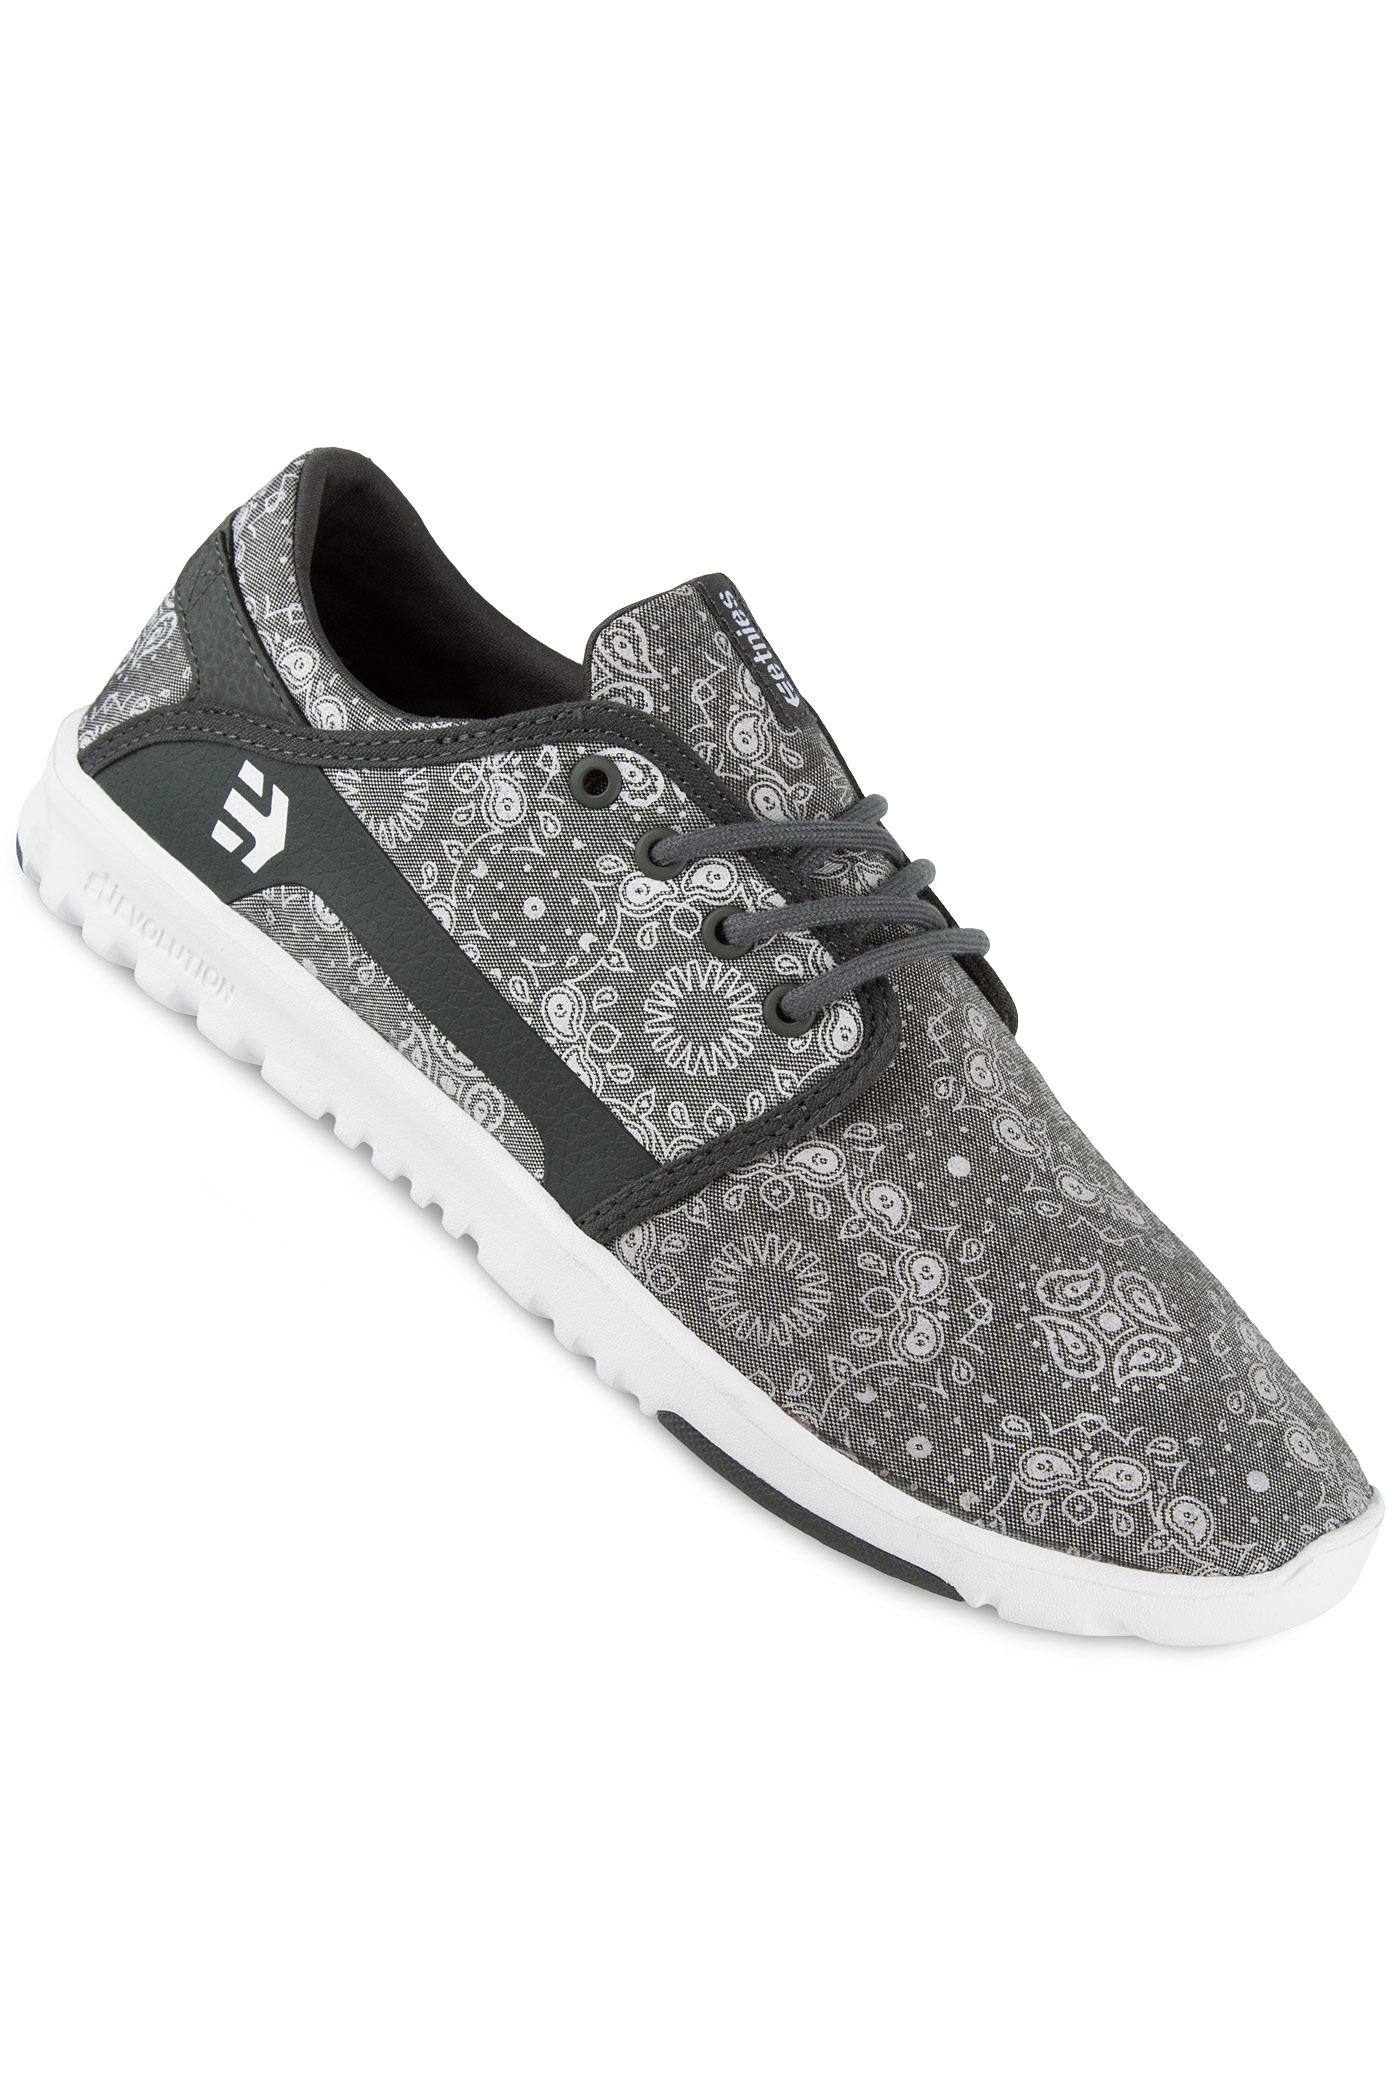 Etnies Scout Shoe (dark grey white) buy at skatedeluxe